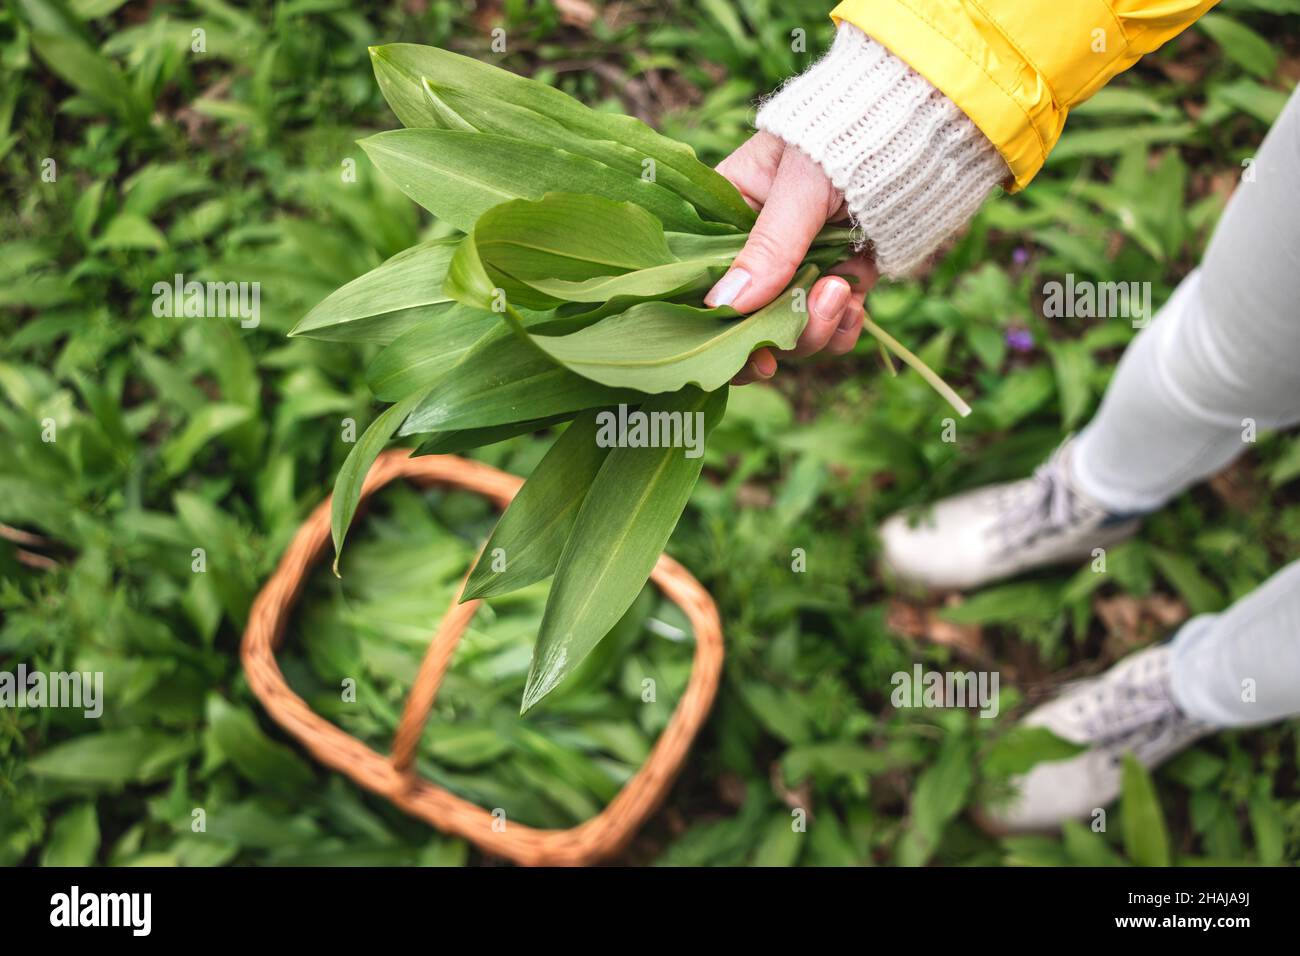 Woman picking Wild Garlic (allium ursinum) in woodland. Harvesting Ramson leaves herb into wicker basket Stock Photo